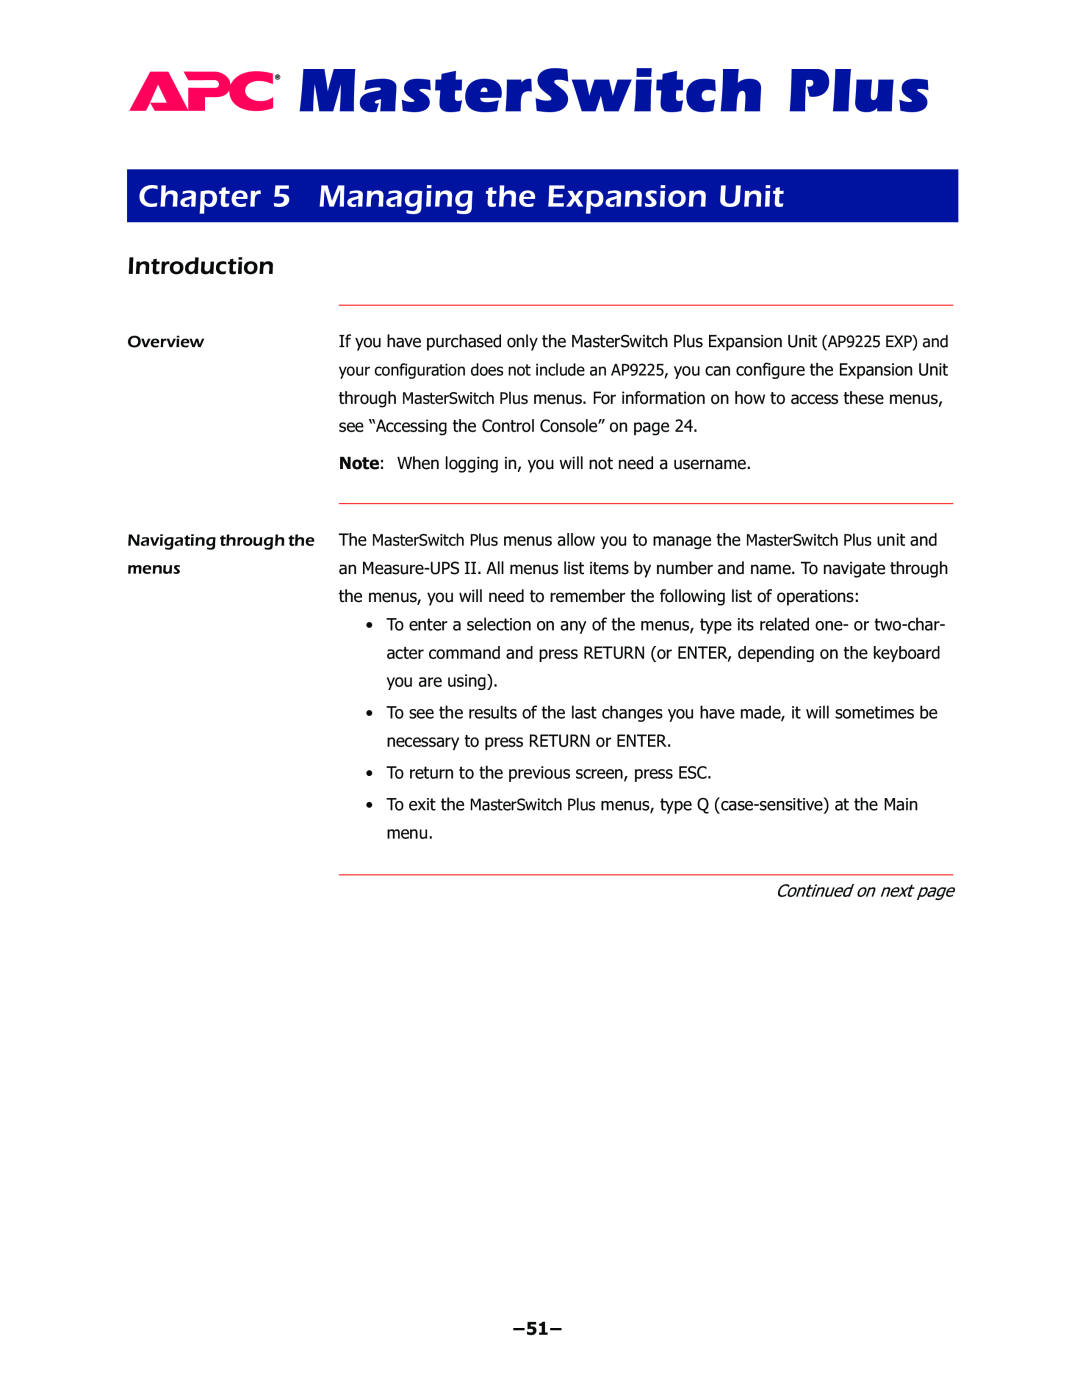 APC AP9225EXP manual Managing the Expansion Unit, VHH³$FFHVVLQJWKH&RQWURO&RQVROH´RQSDJH, ±±, MasterSwitch Plus 